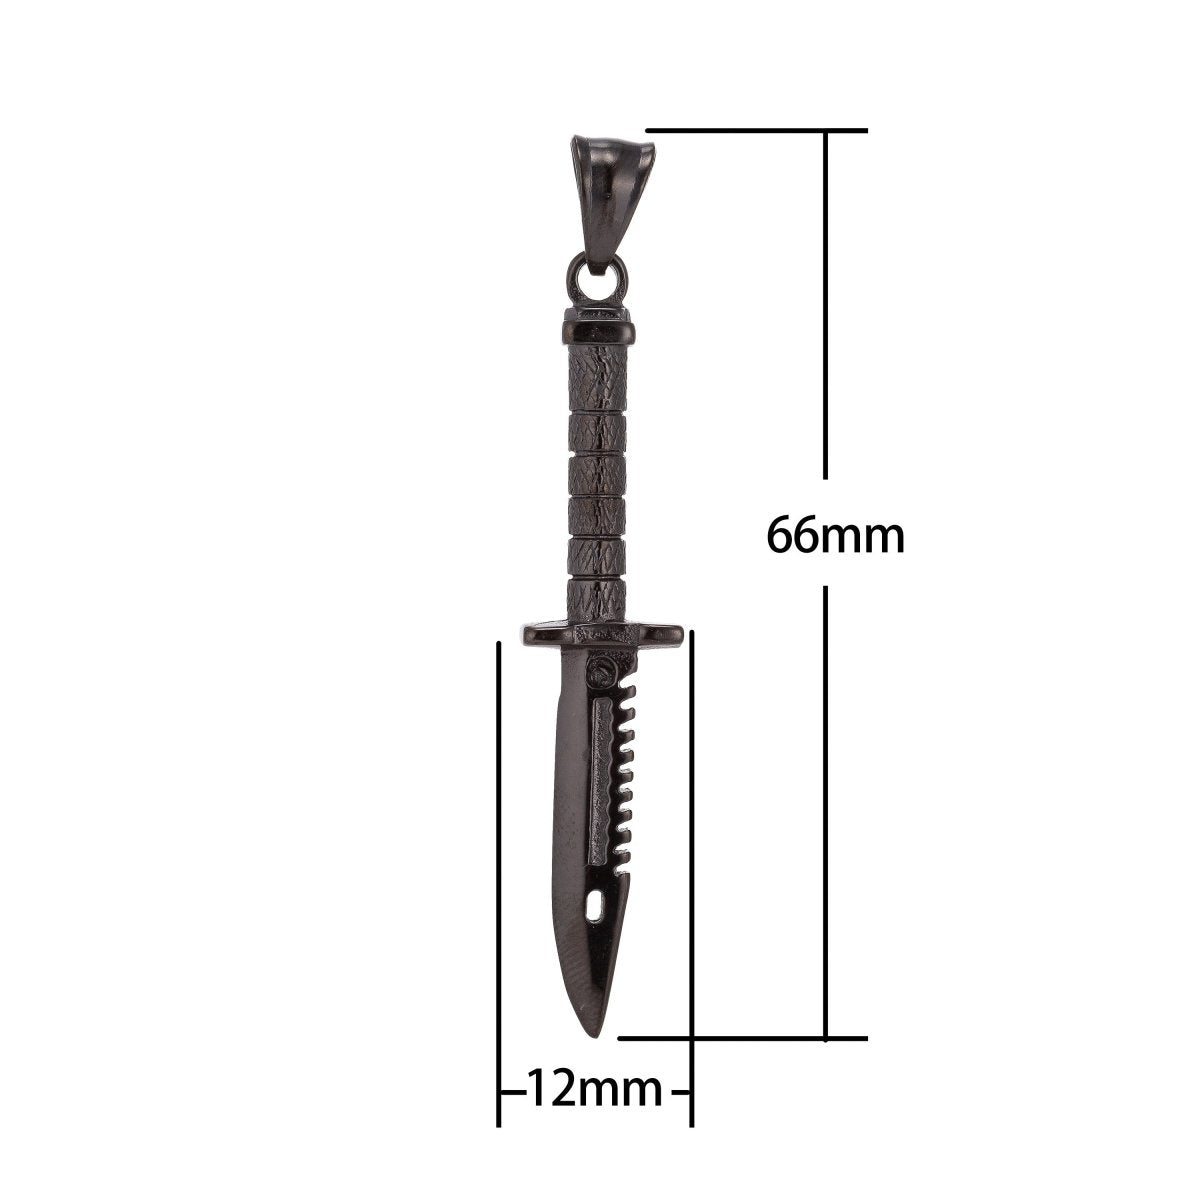 Dark Black Gun Metal Stainless Steel Knife Charm Pendant w/ Bails Findings for Earring Necklace Men Jewelry Making Supplies J-416 - DLUXCA